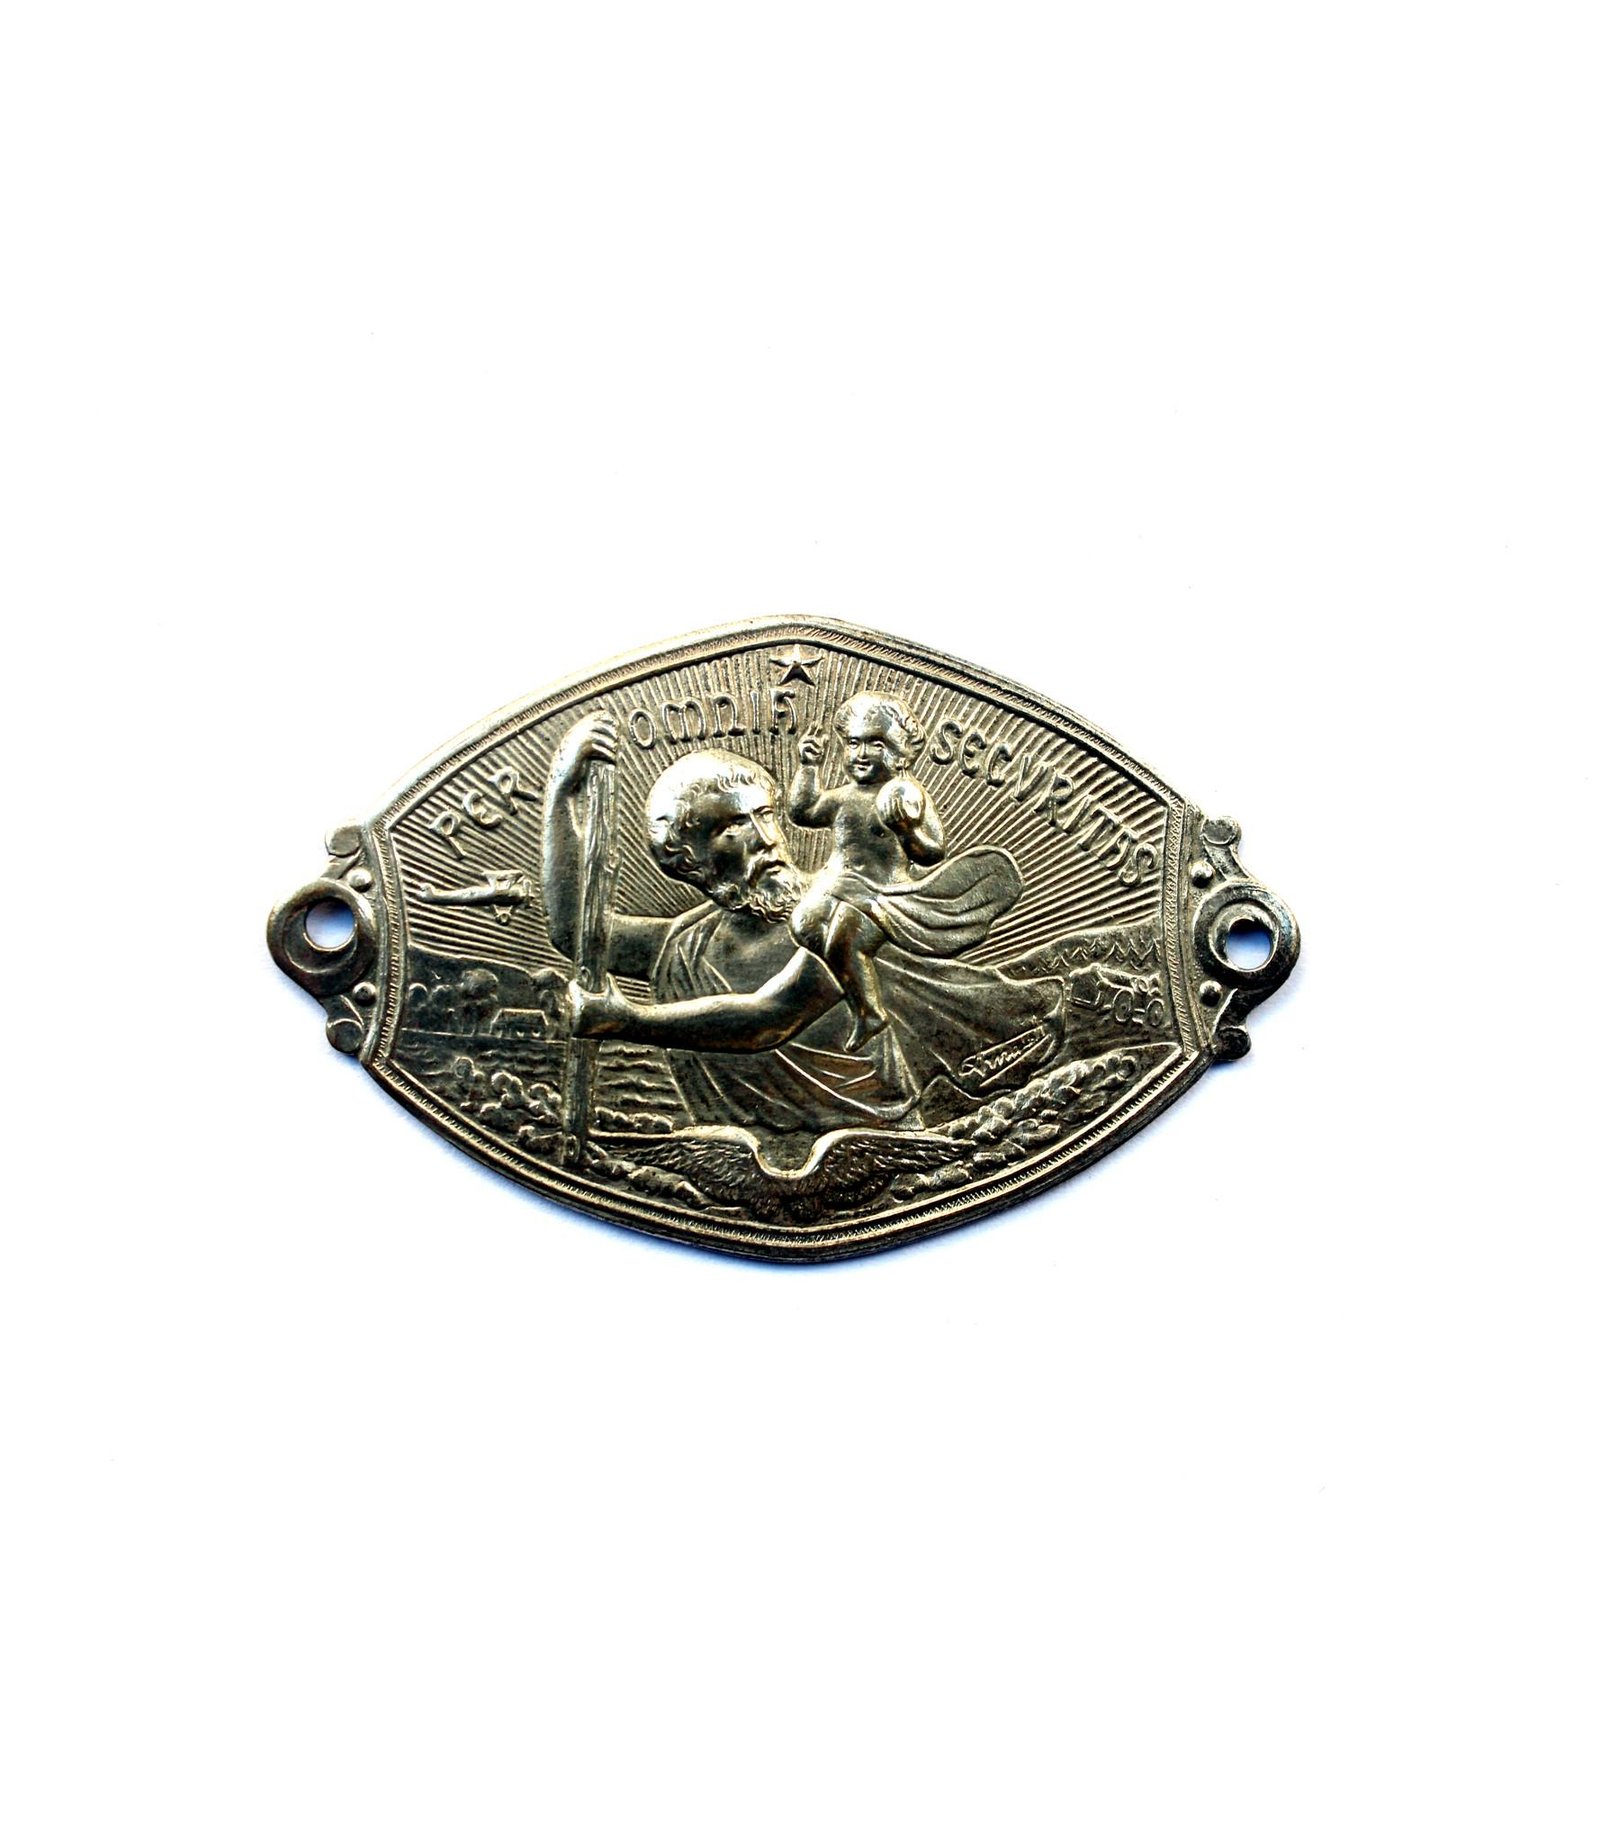 Saint Christopher badge signed by Arnault